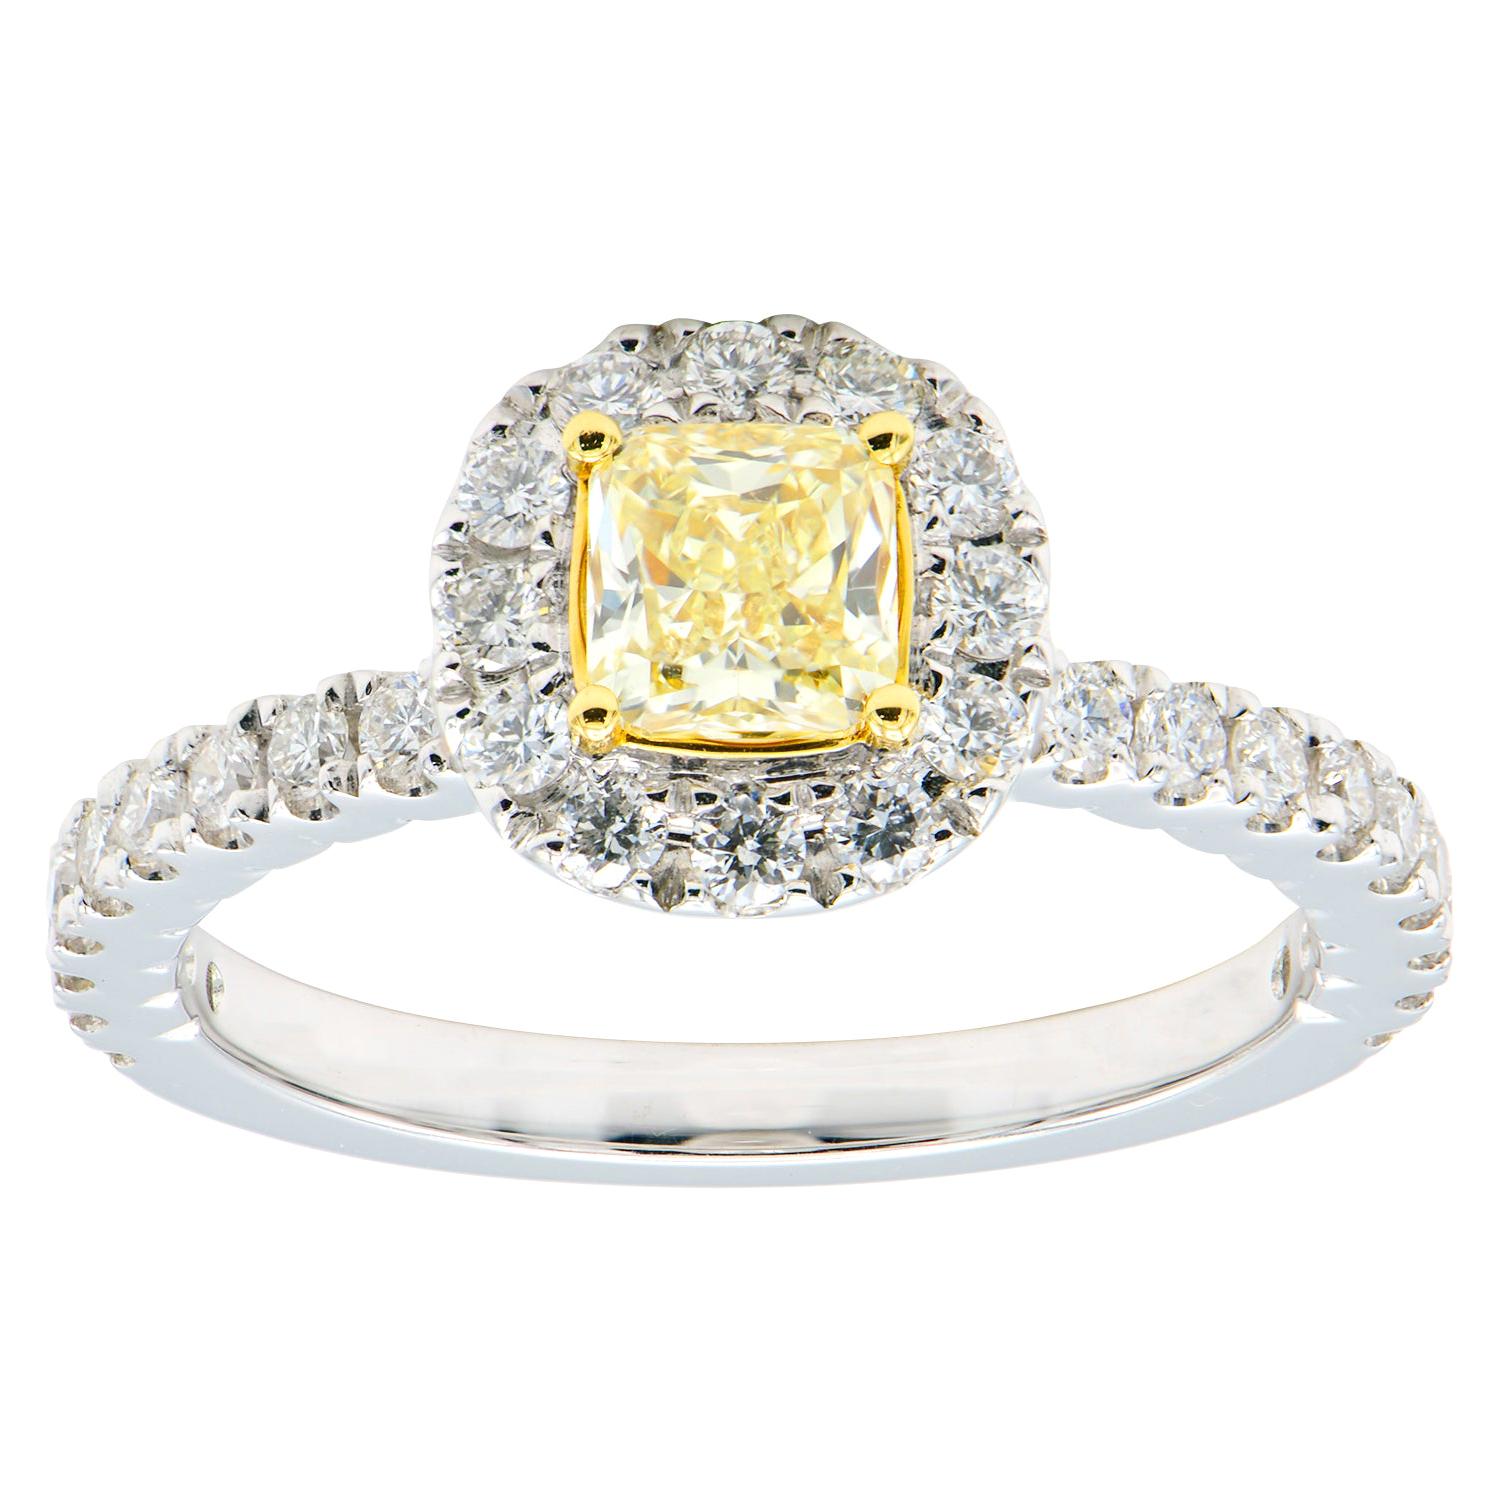 0.50 Carat Radiant Cut Yellow Diamond Ring with Diamond Halo and Band